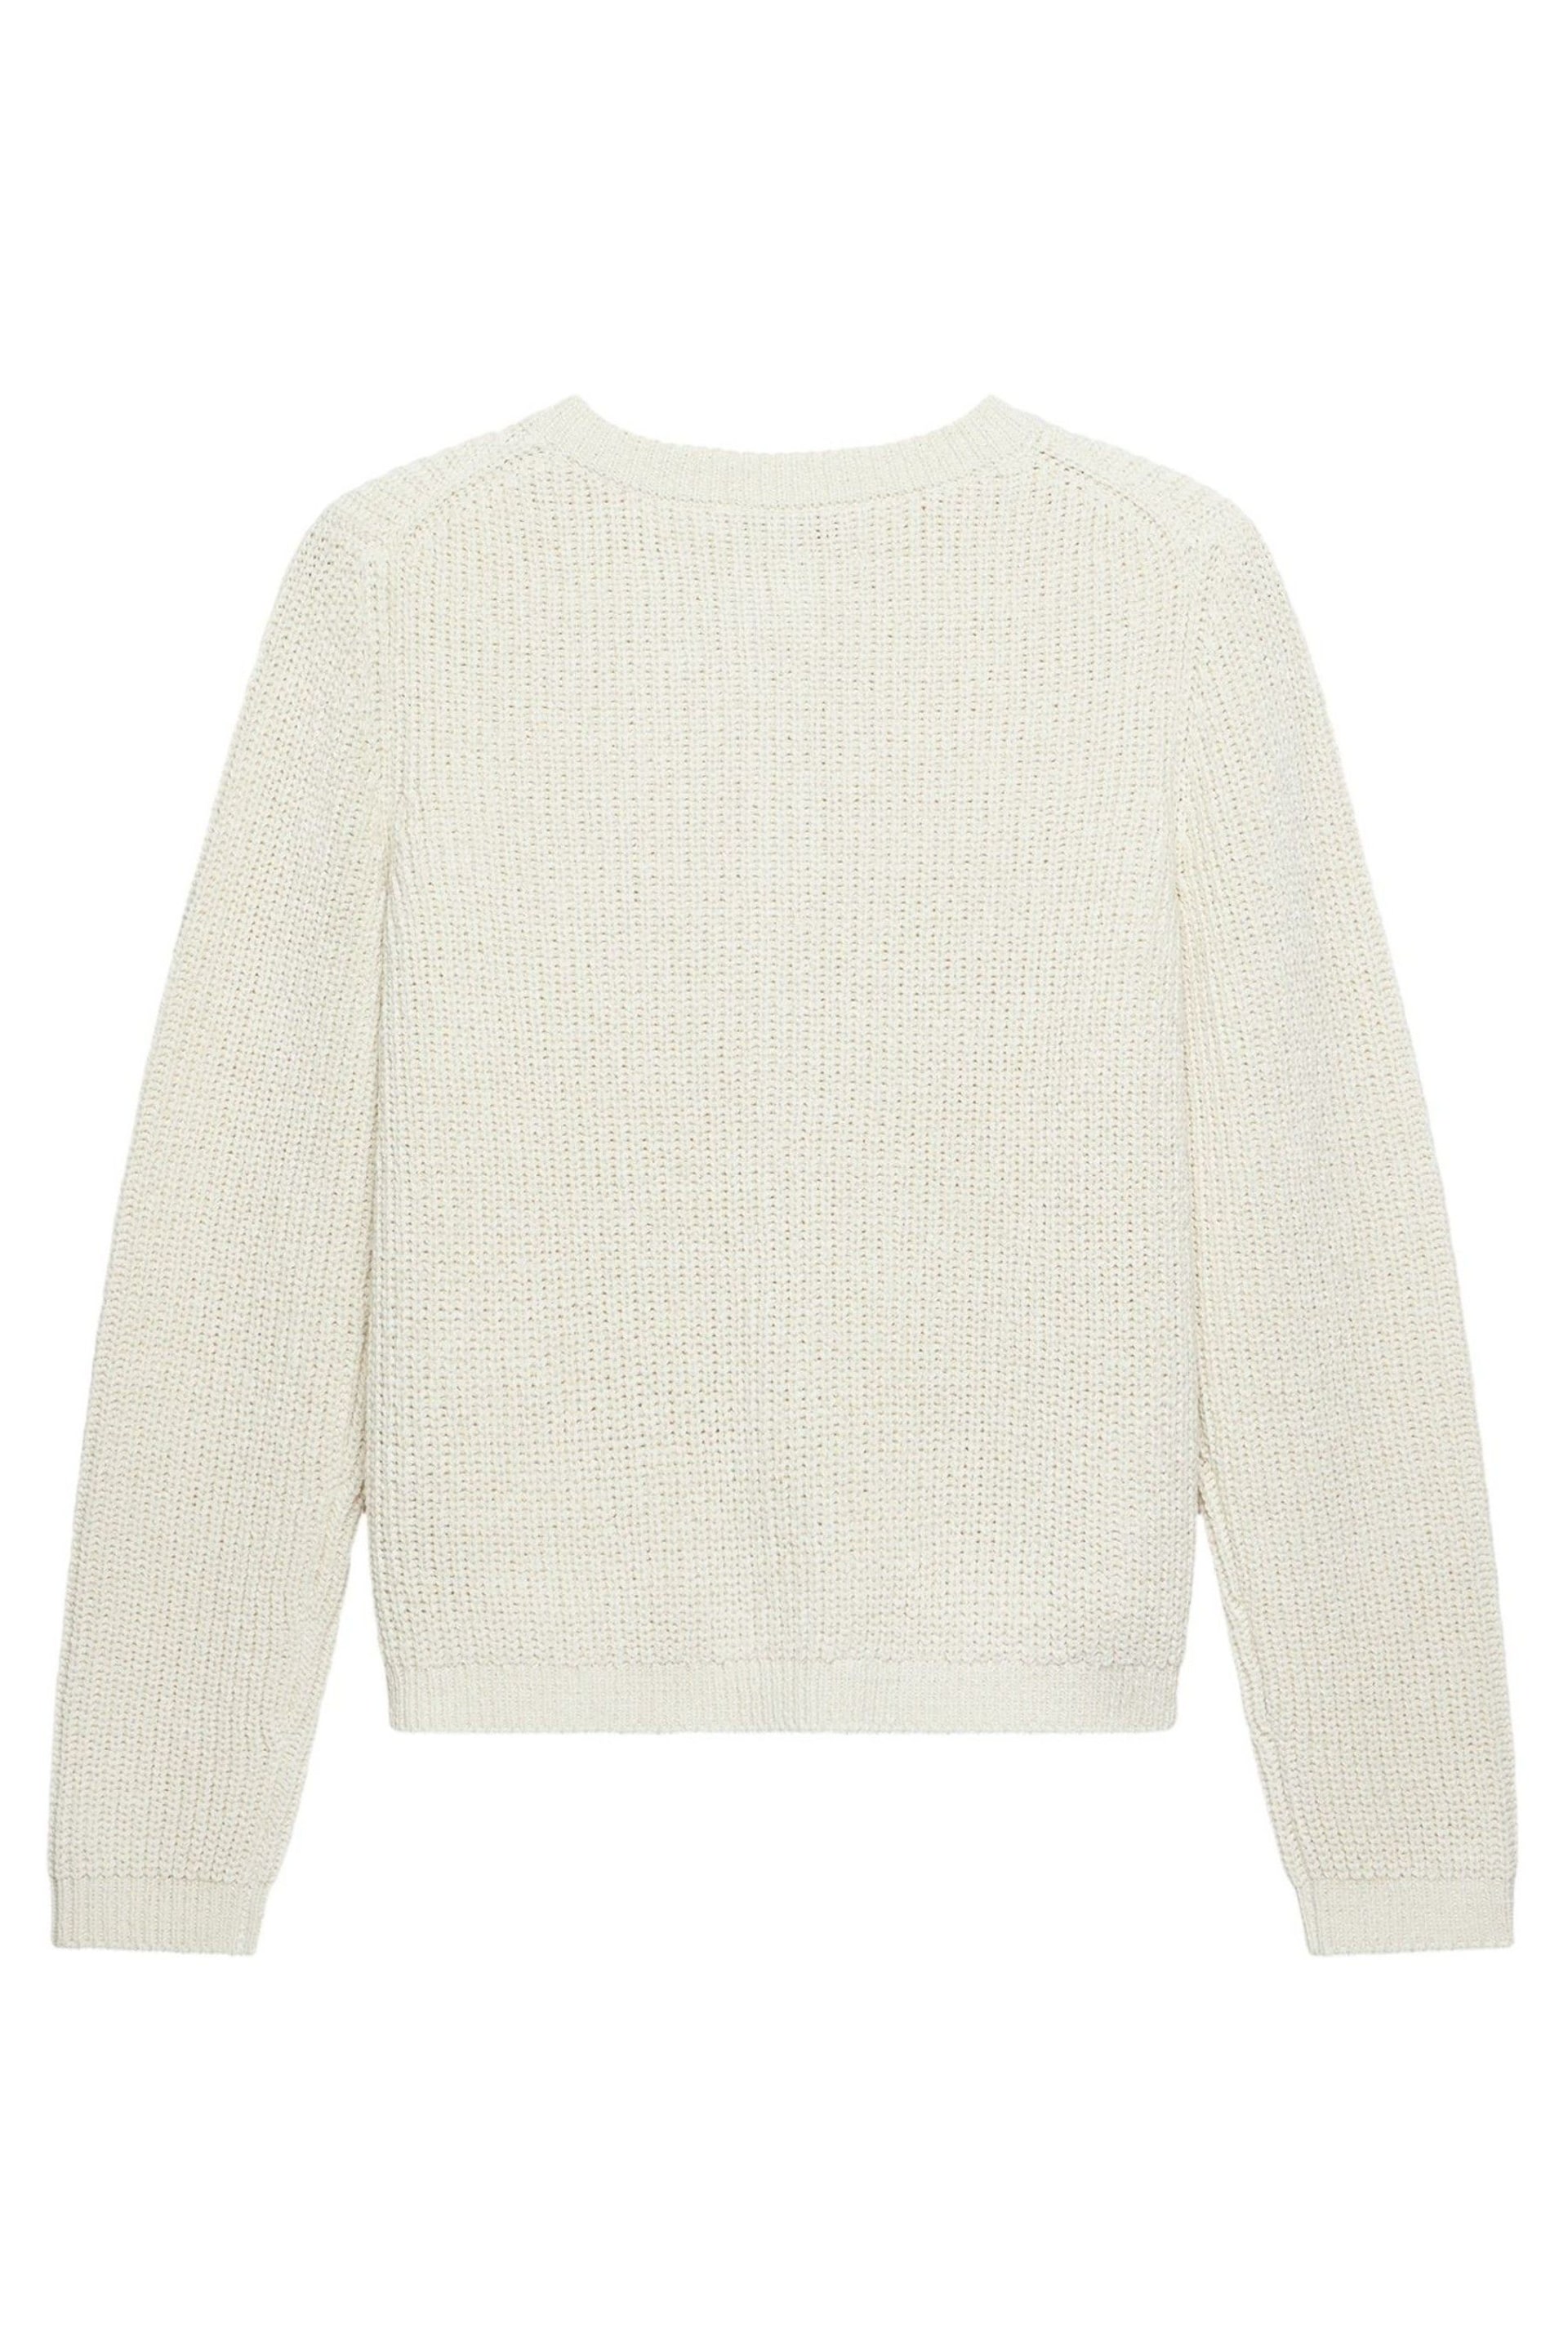 Mint Velvet Cream Cotton Knit Cardigan - Image 4 of 4